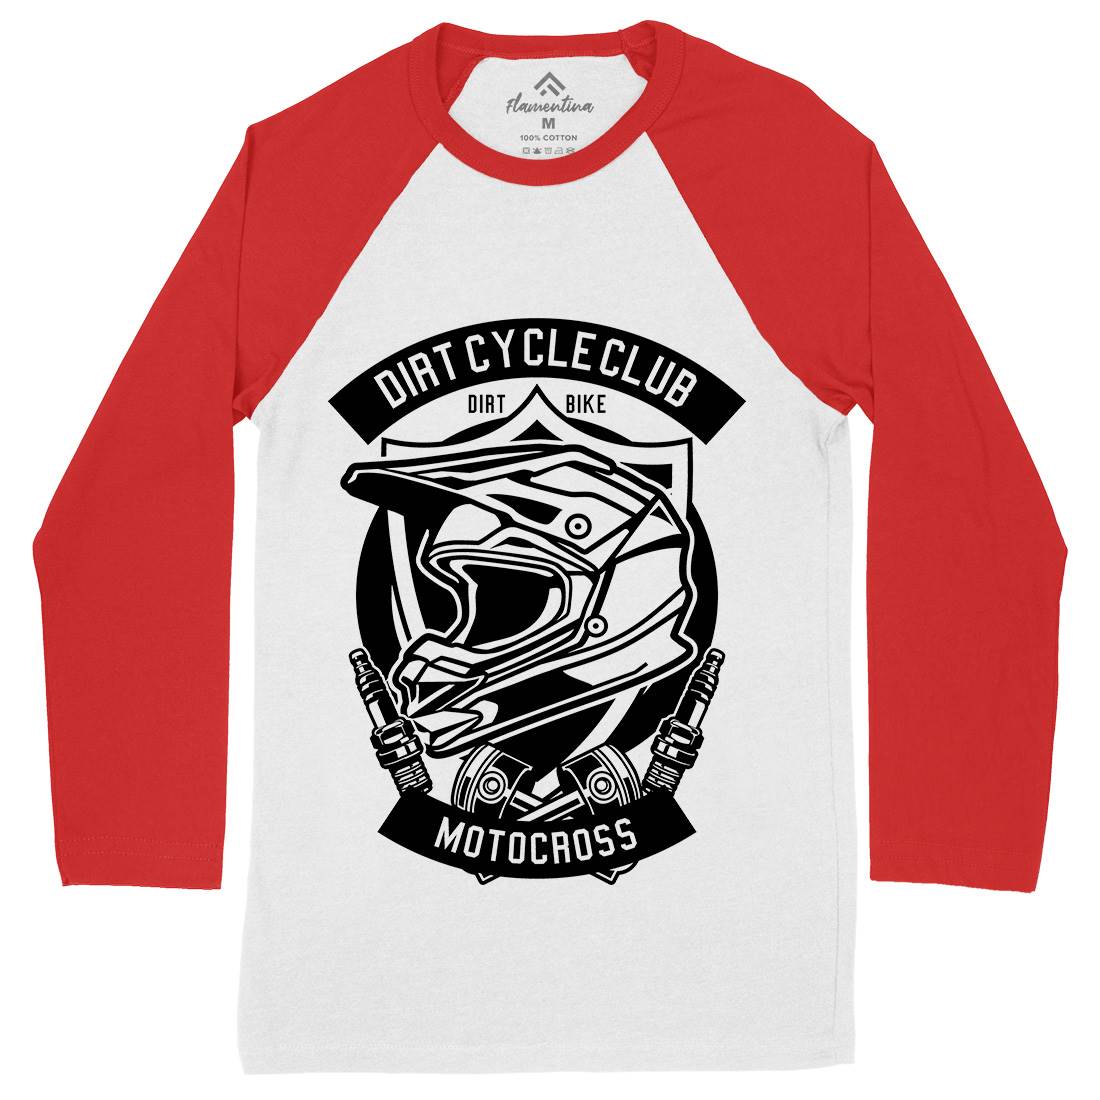 Dirty Cycle Club Mens Long Sleeve Baseball T-Shirt Motorcycles B532